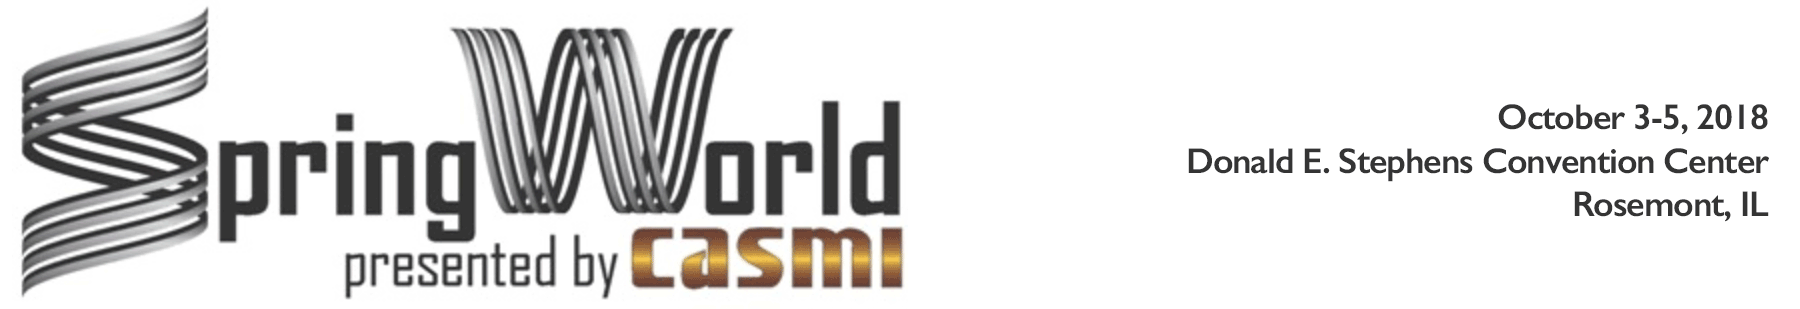 2018 SpringWorld presented by CASMI